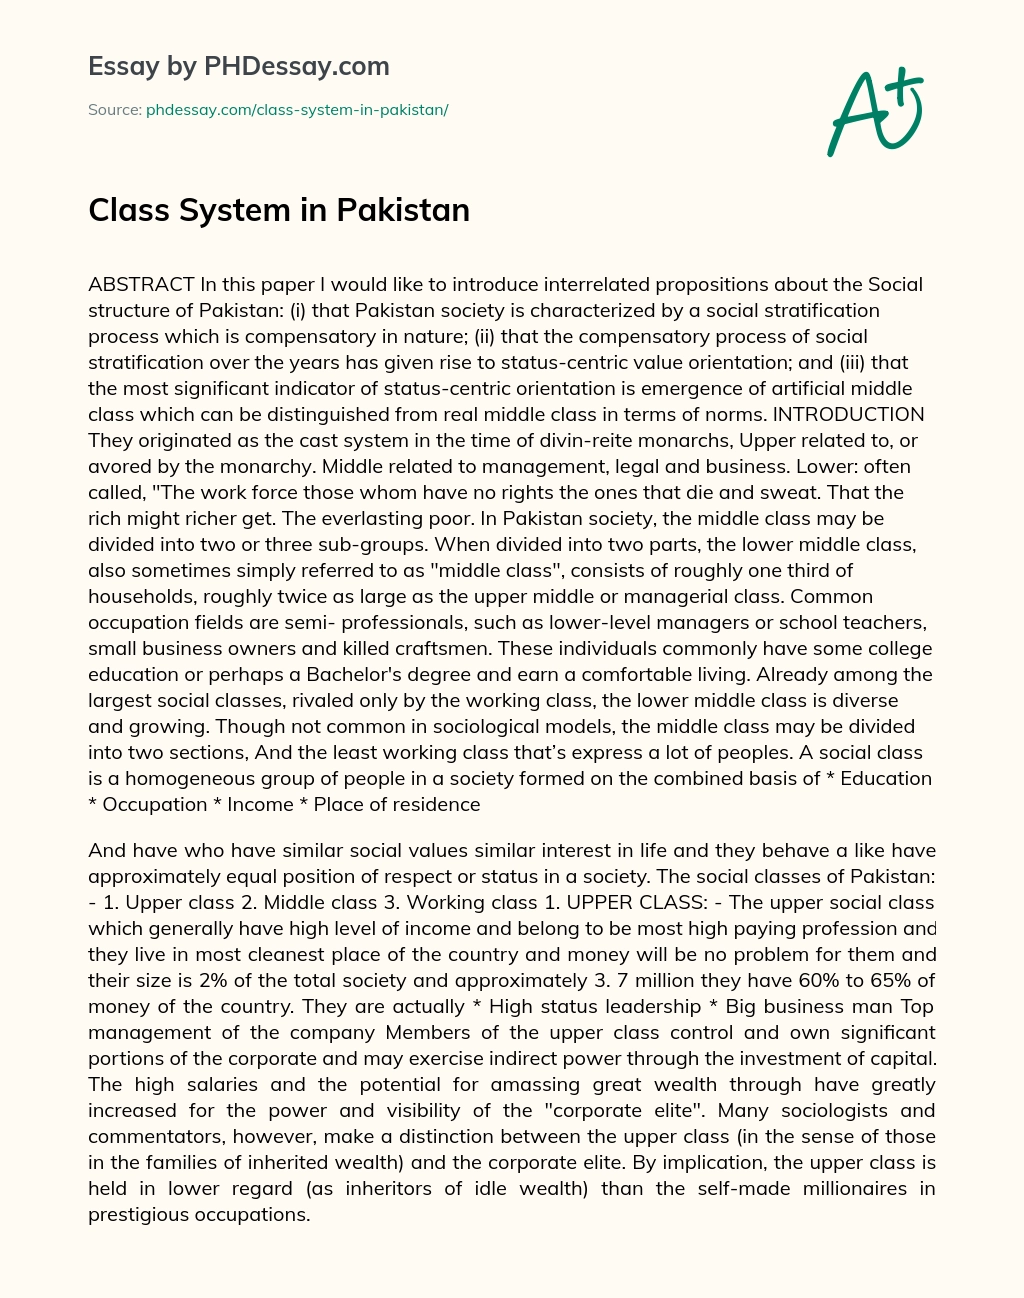 Class System in Pakistan essay